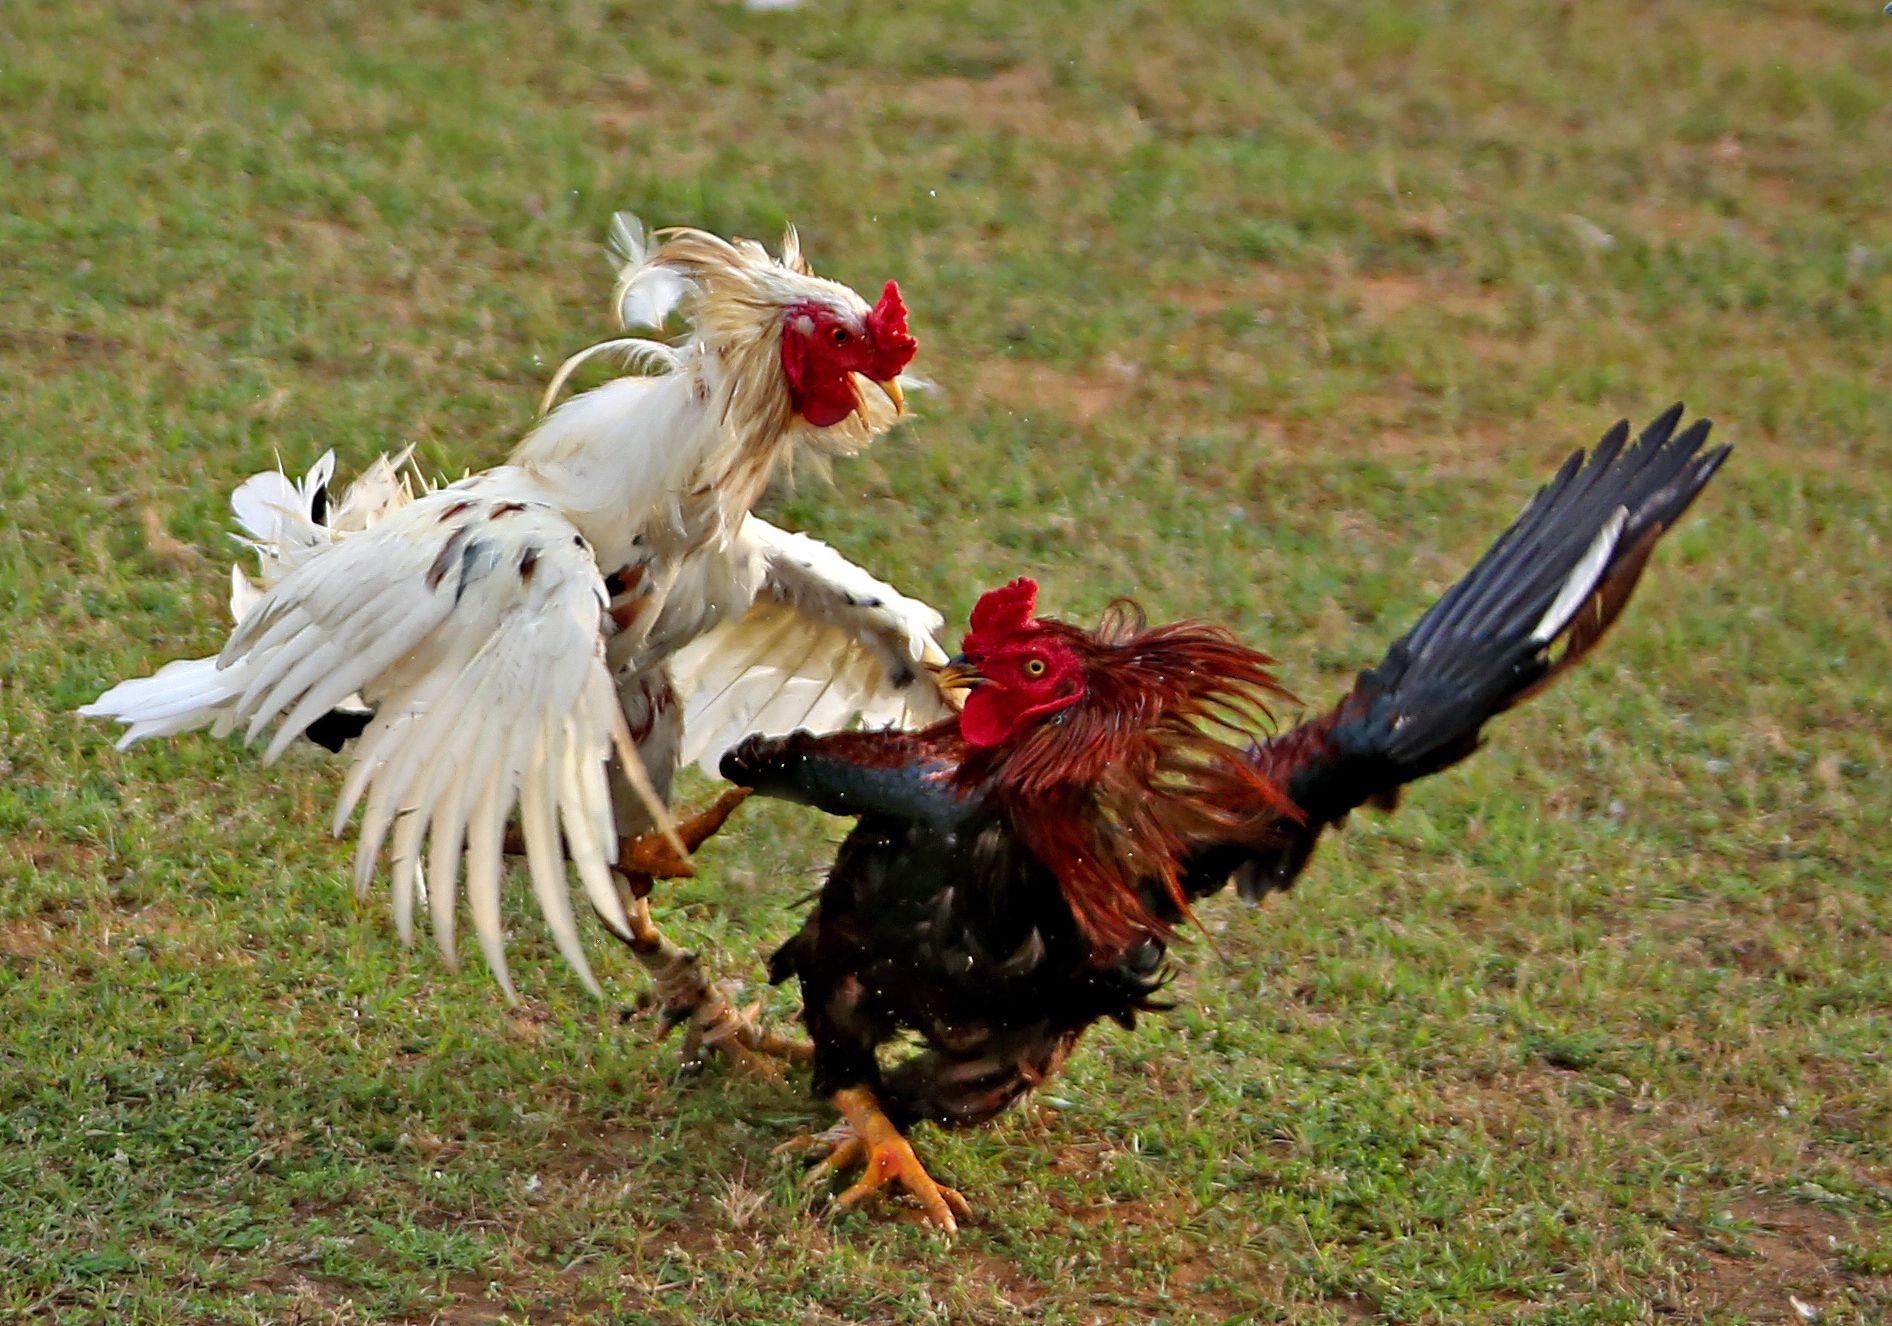 With Louisiana Ban, Cockfighting Takes National Bow